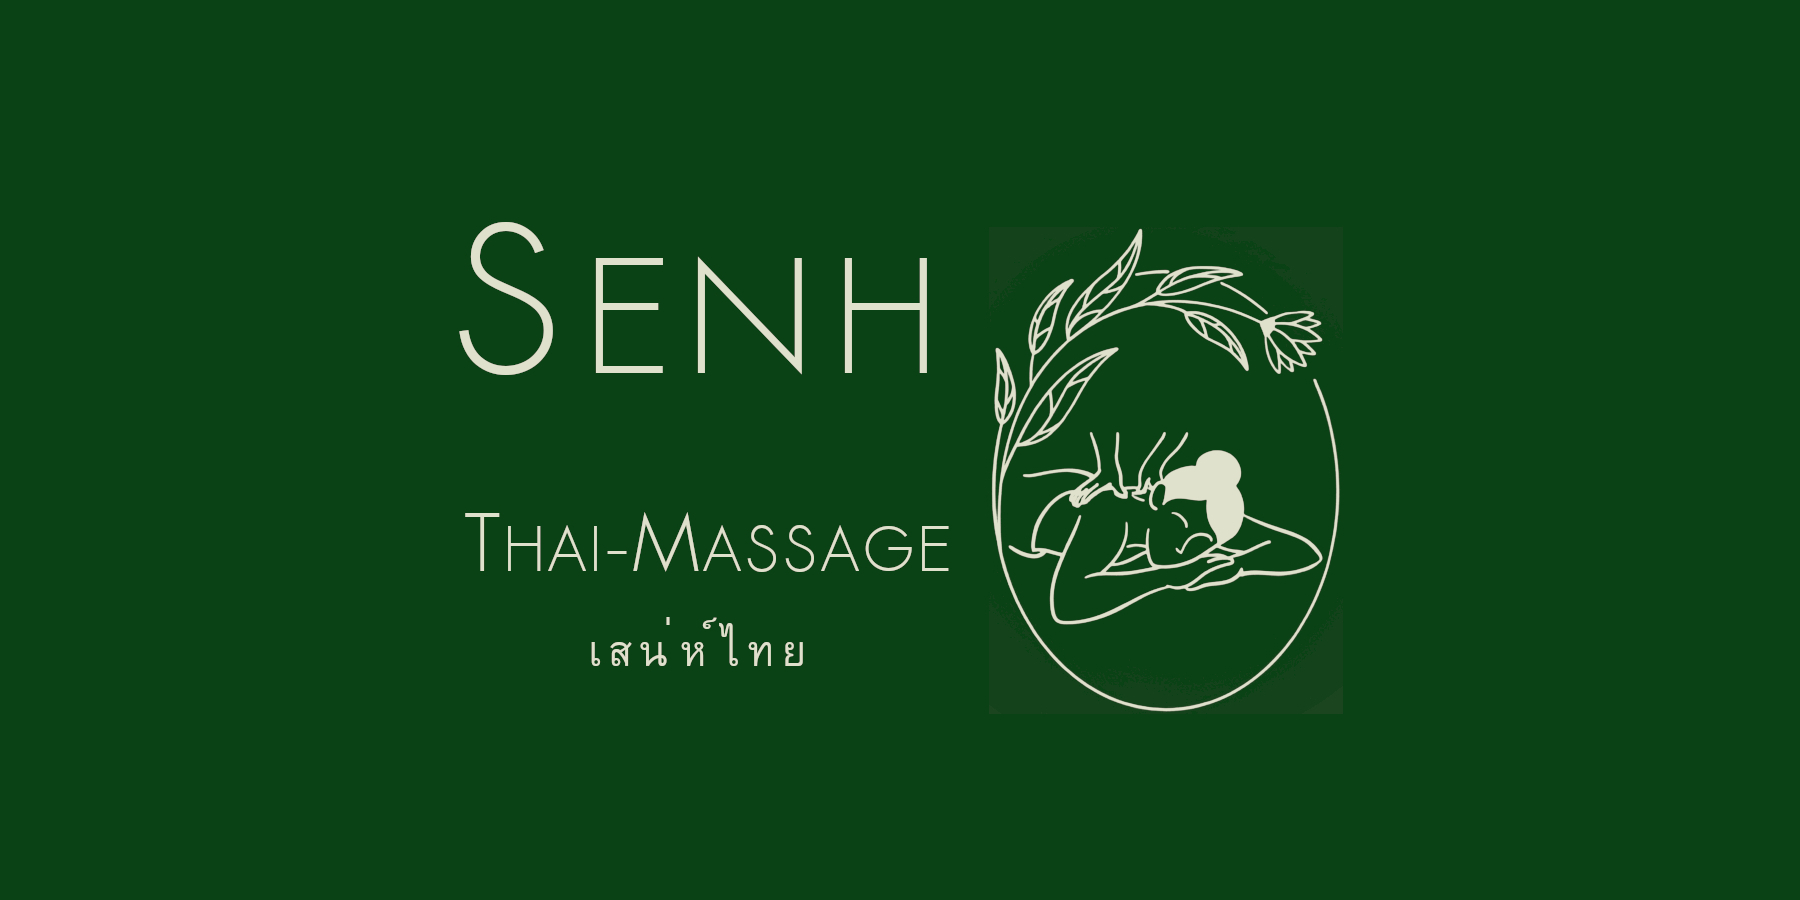 SENH THAI-MASSAGE